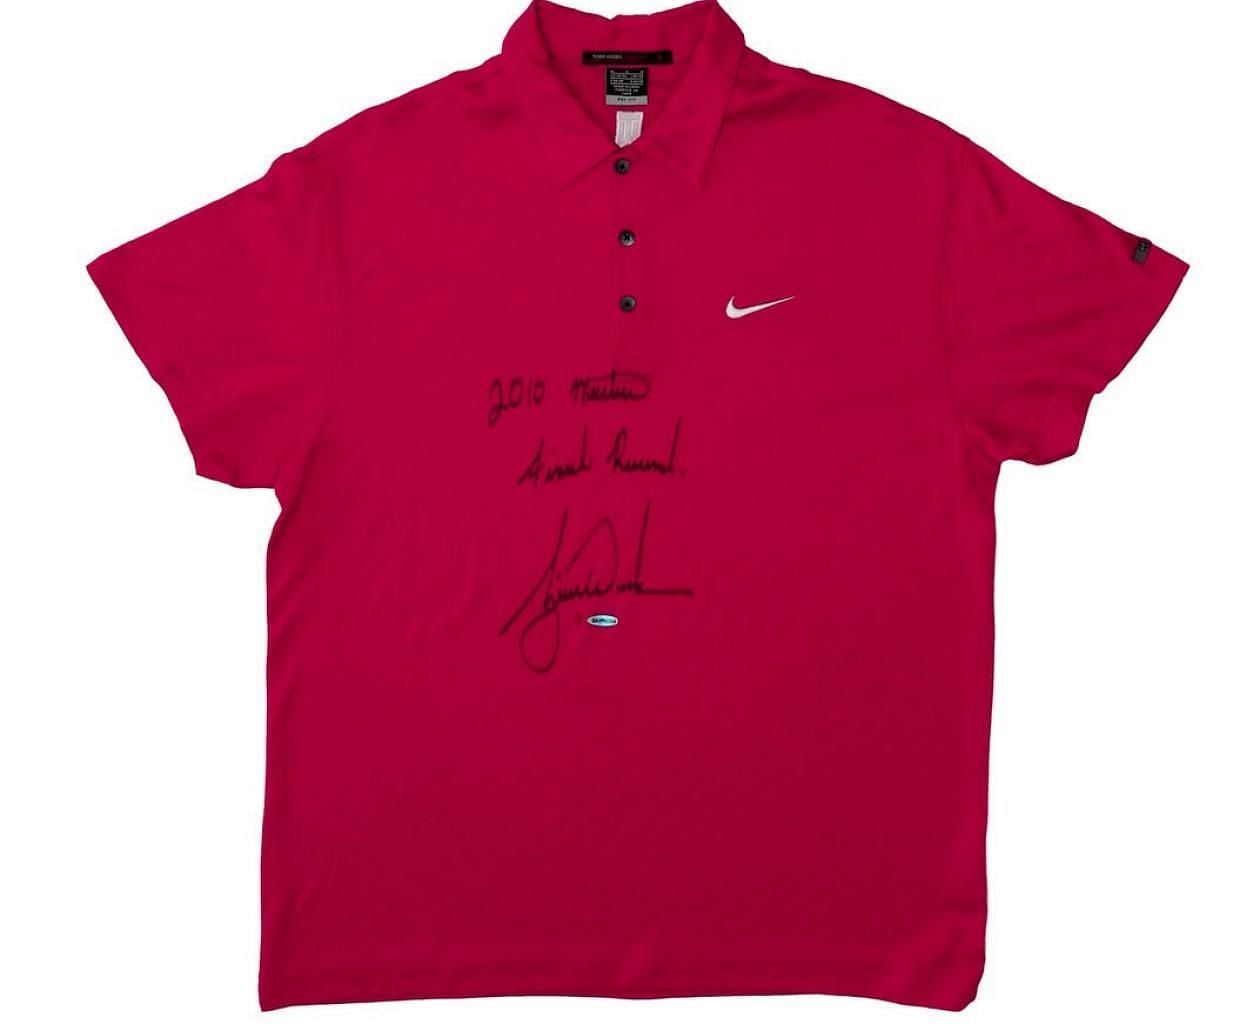 Tiger Woods&#039; red shirt for auction (Image via Golf Digest)